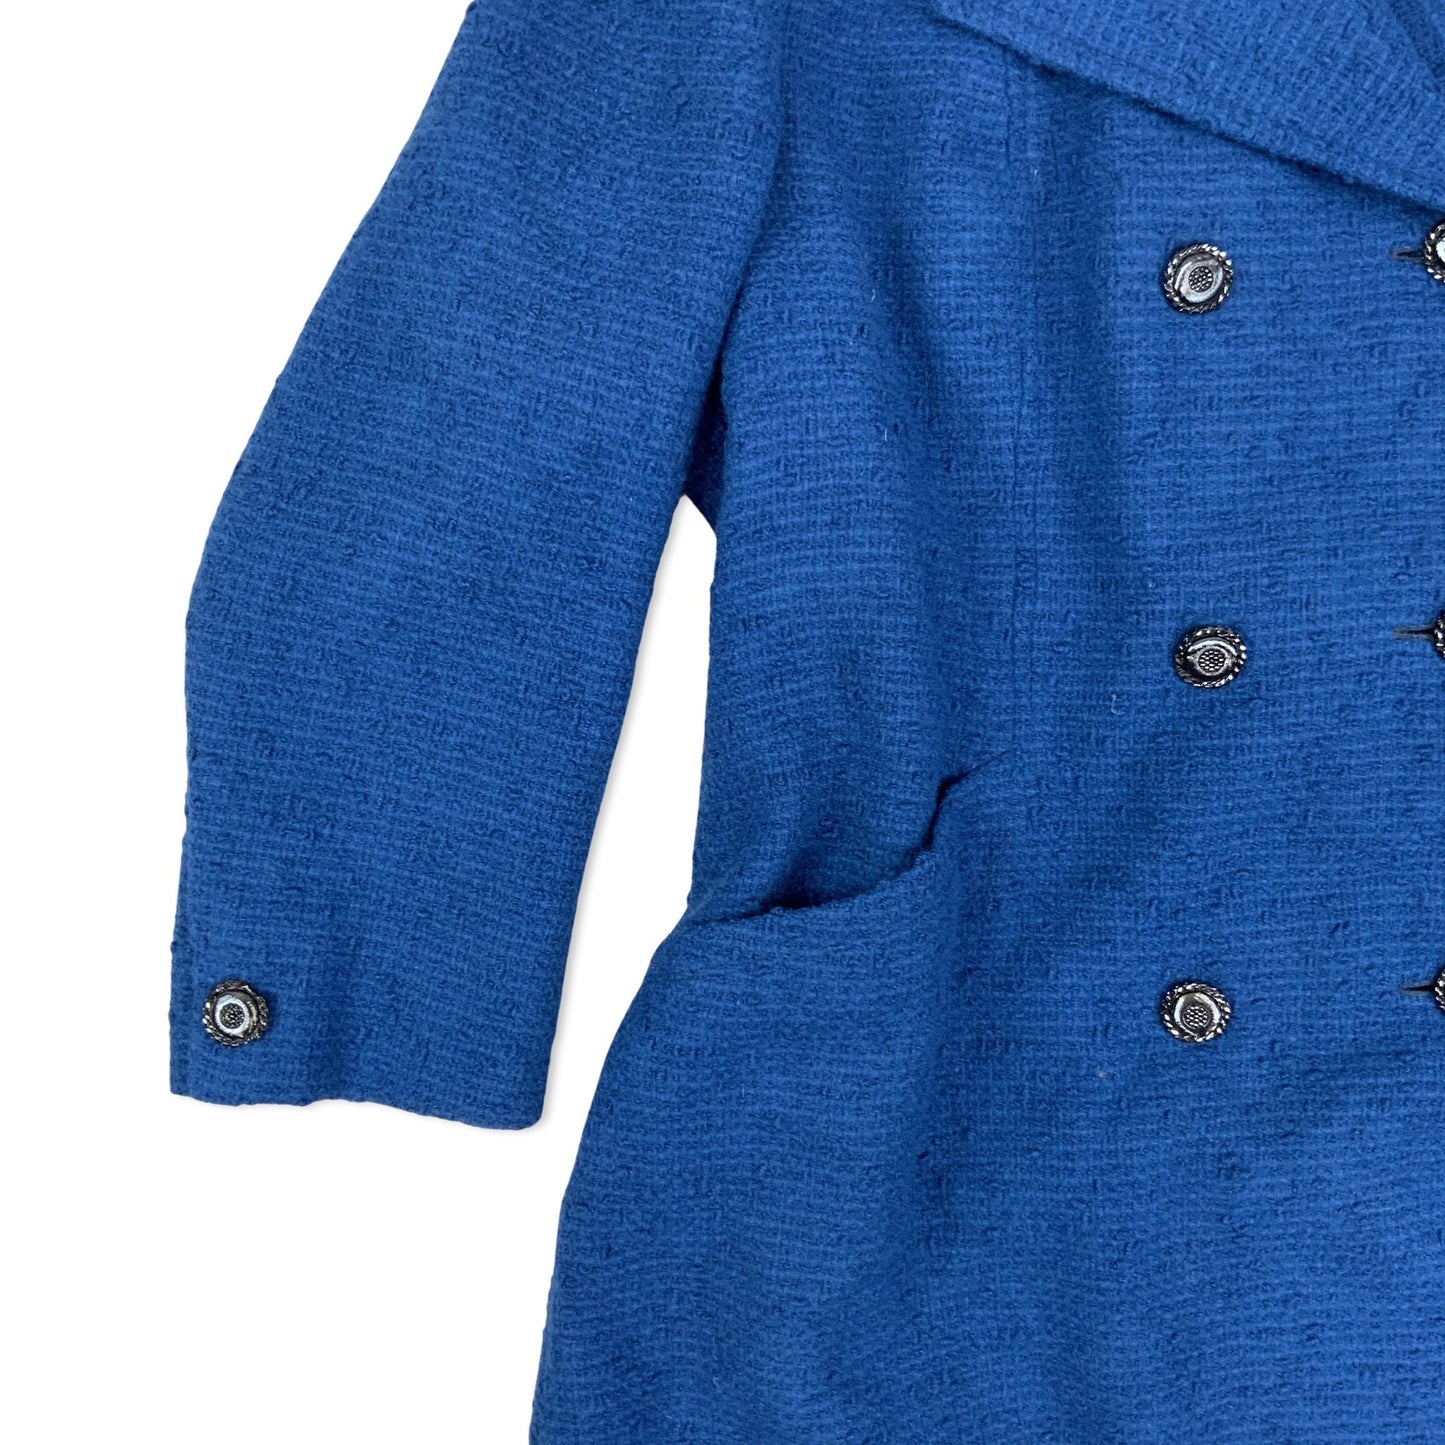 Vintage Blue Bouclé Double Breasted Wool Coat 16 18